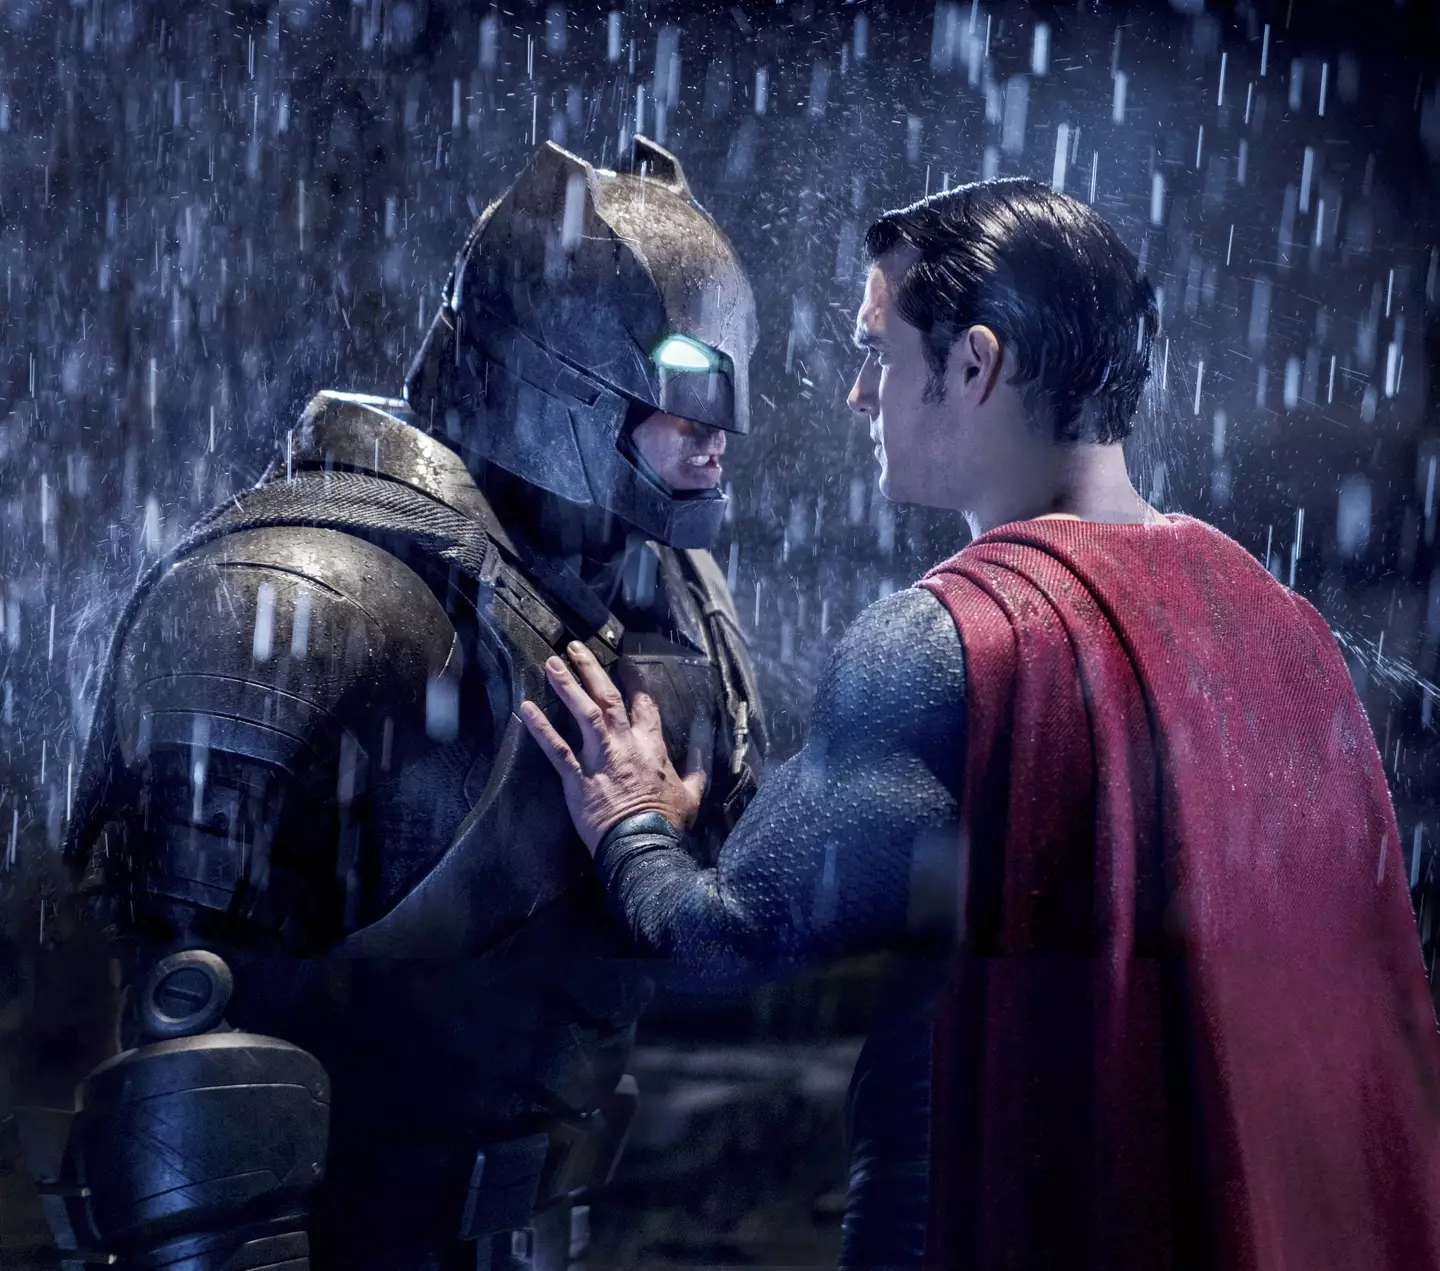 Ben Affleck (Batman) stands off against Henry Cavill (Superman) in 2016's Batman V Superman - Dawn Of Justice.